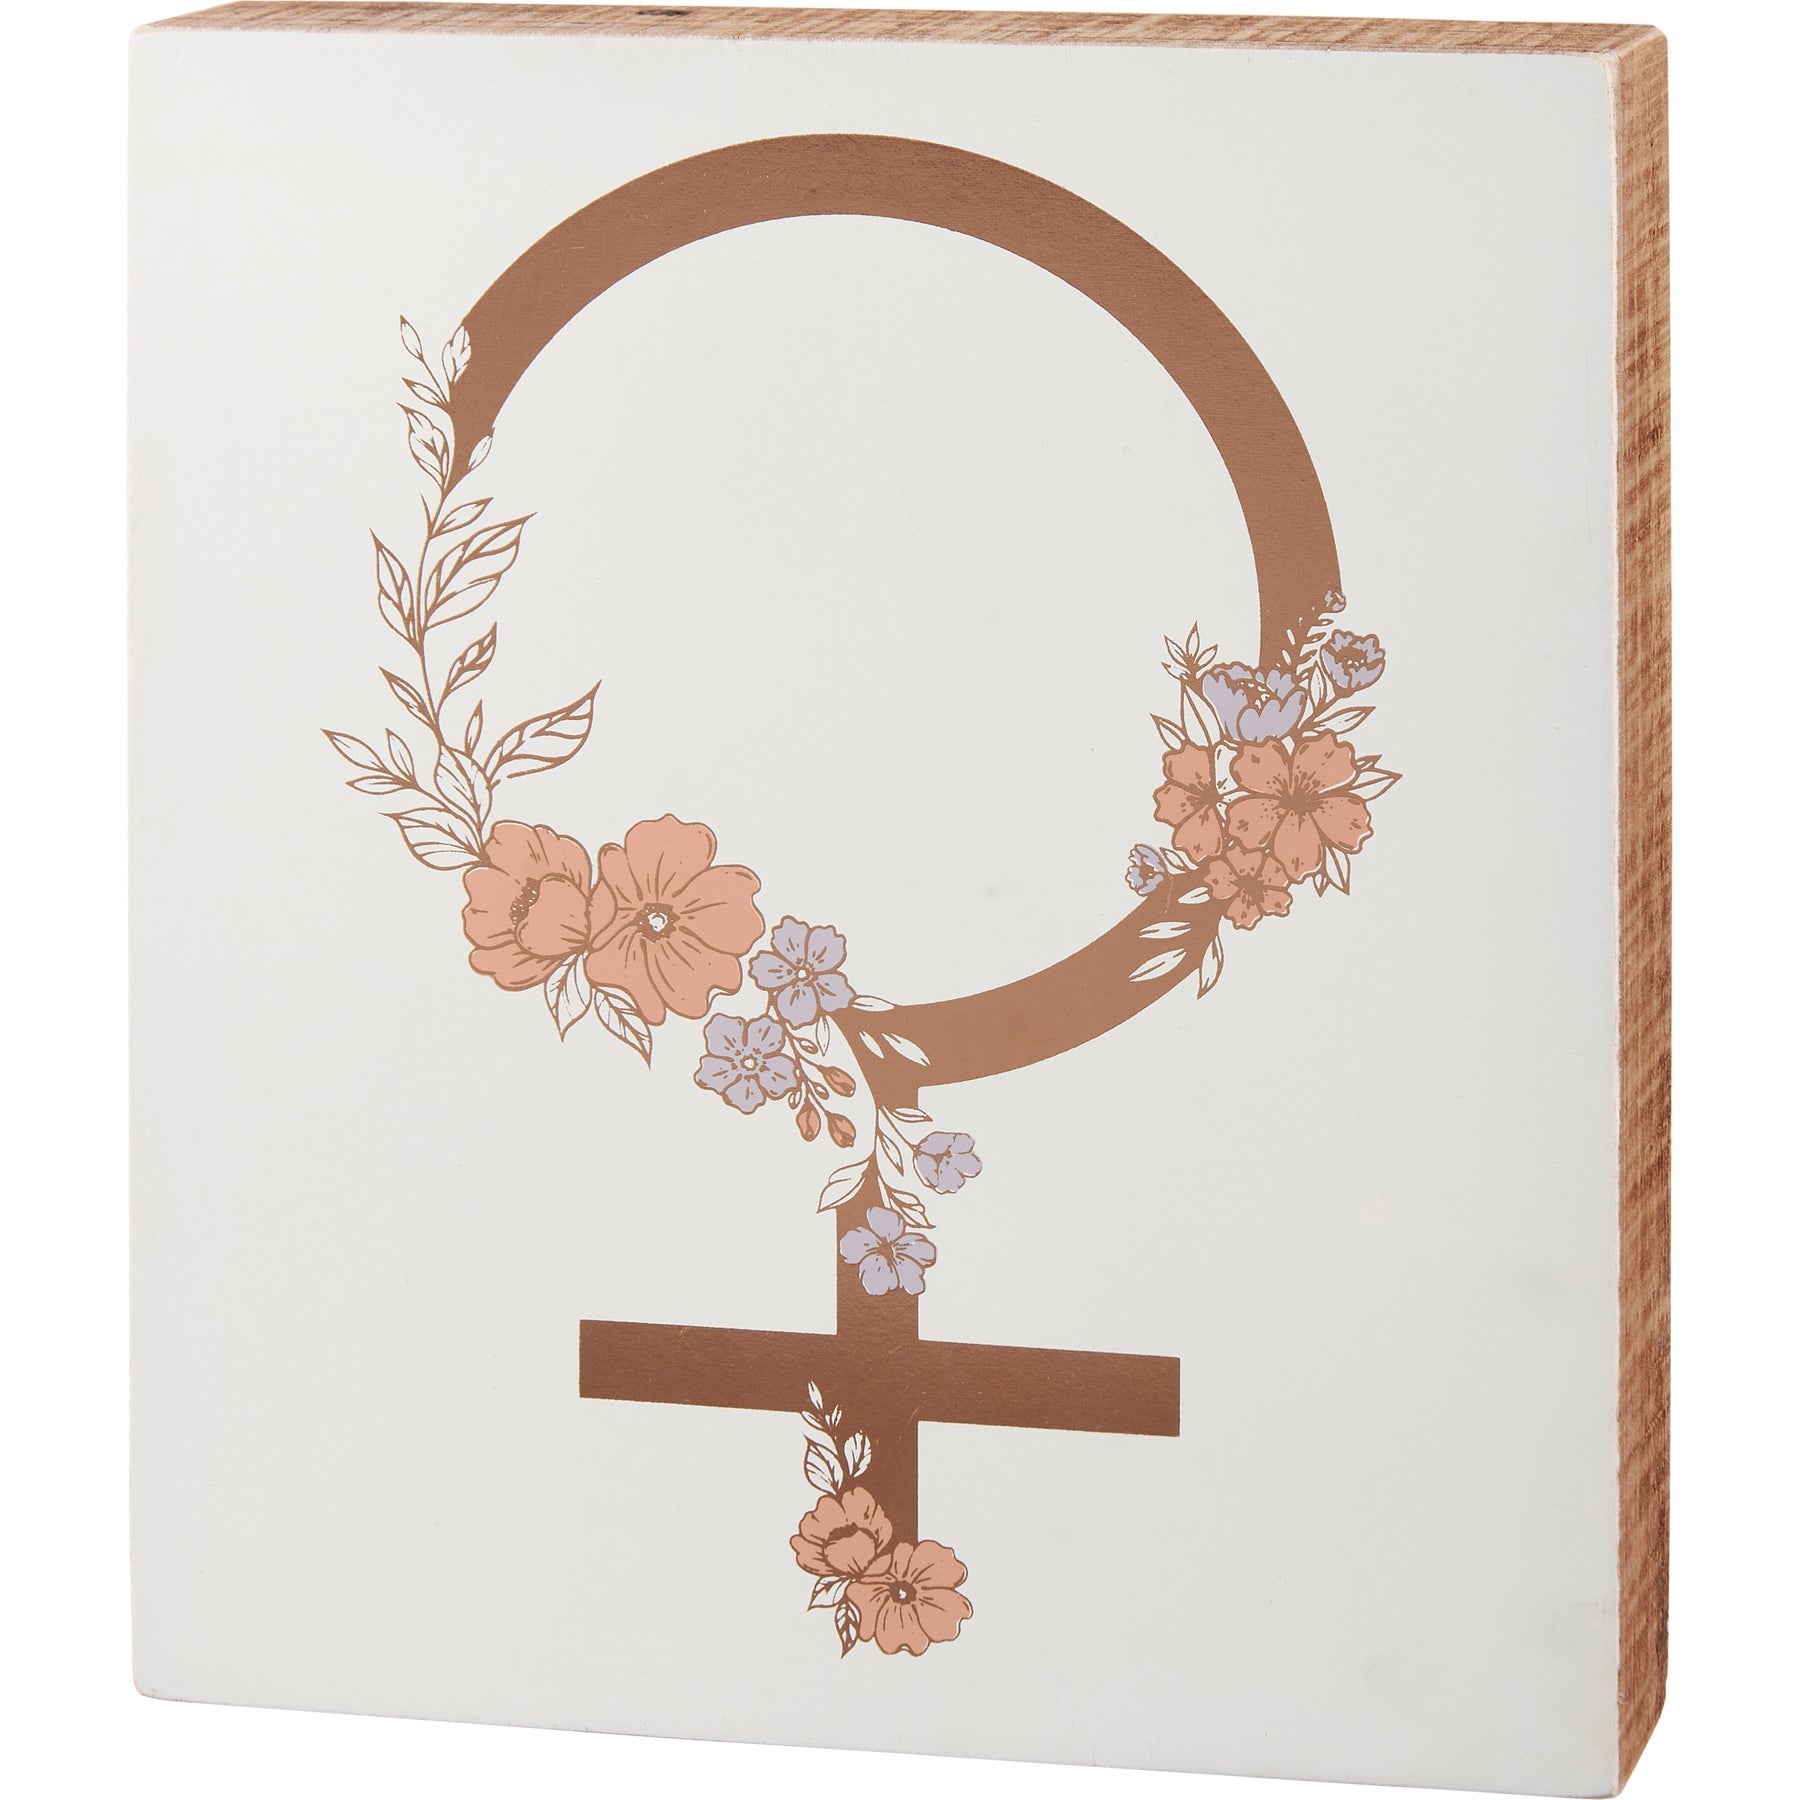 Female Box Sign | Female Gender Symbol Wooden Sign Decor | 7.75" x 9"